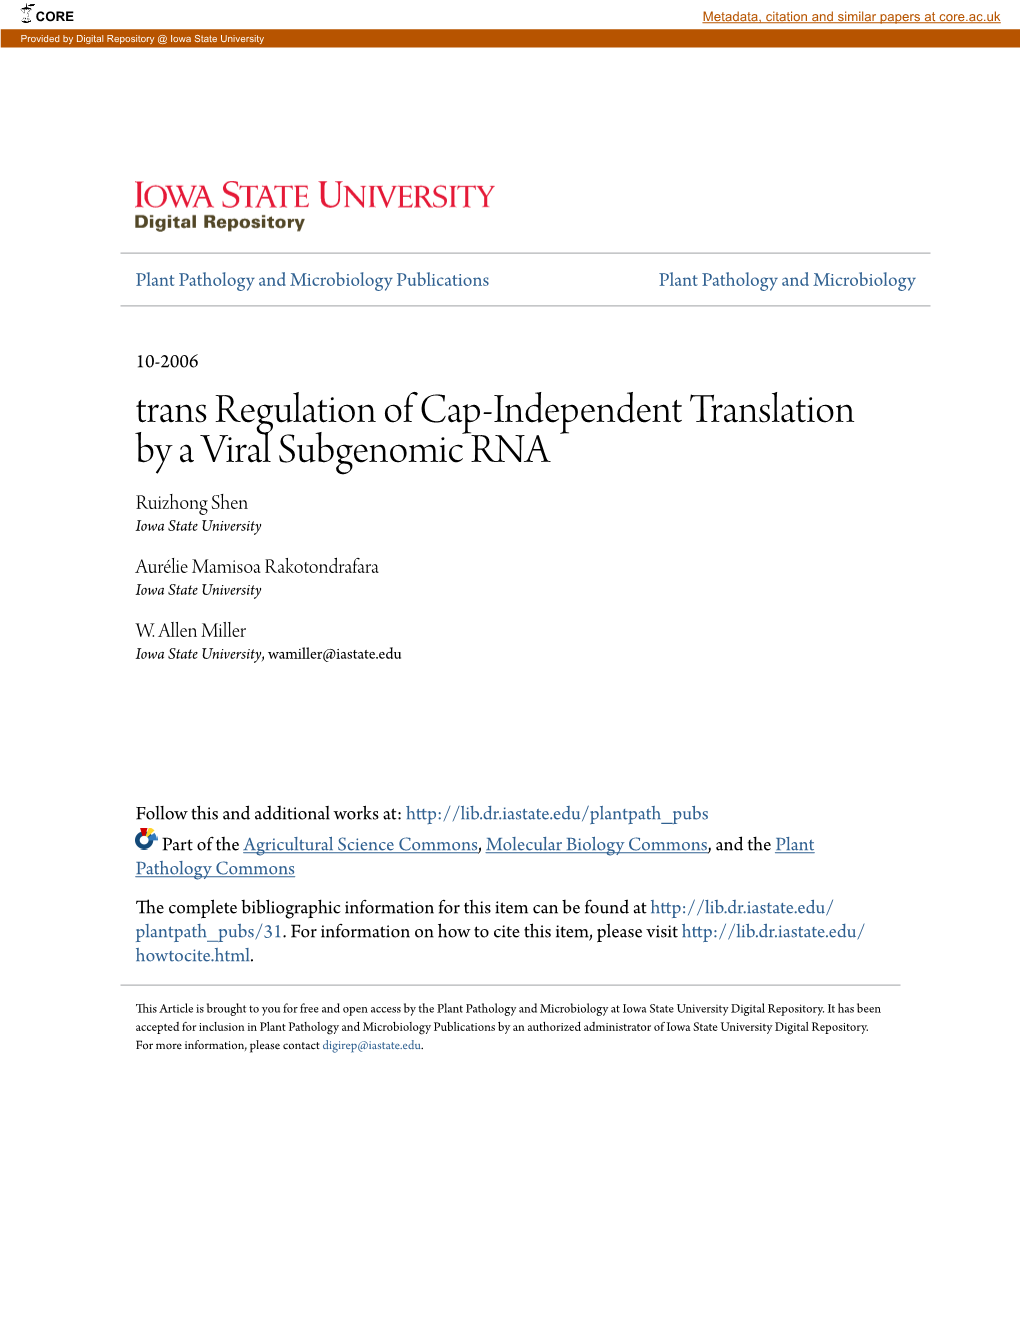 Trans Regulation of Cap-Independent Translation by a Viral Subgenomic RNA Ruizhong Shen Iowa State University